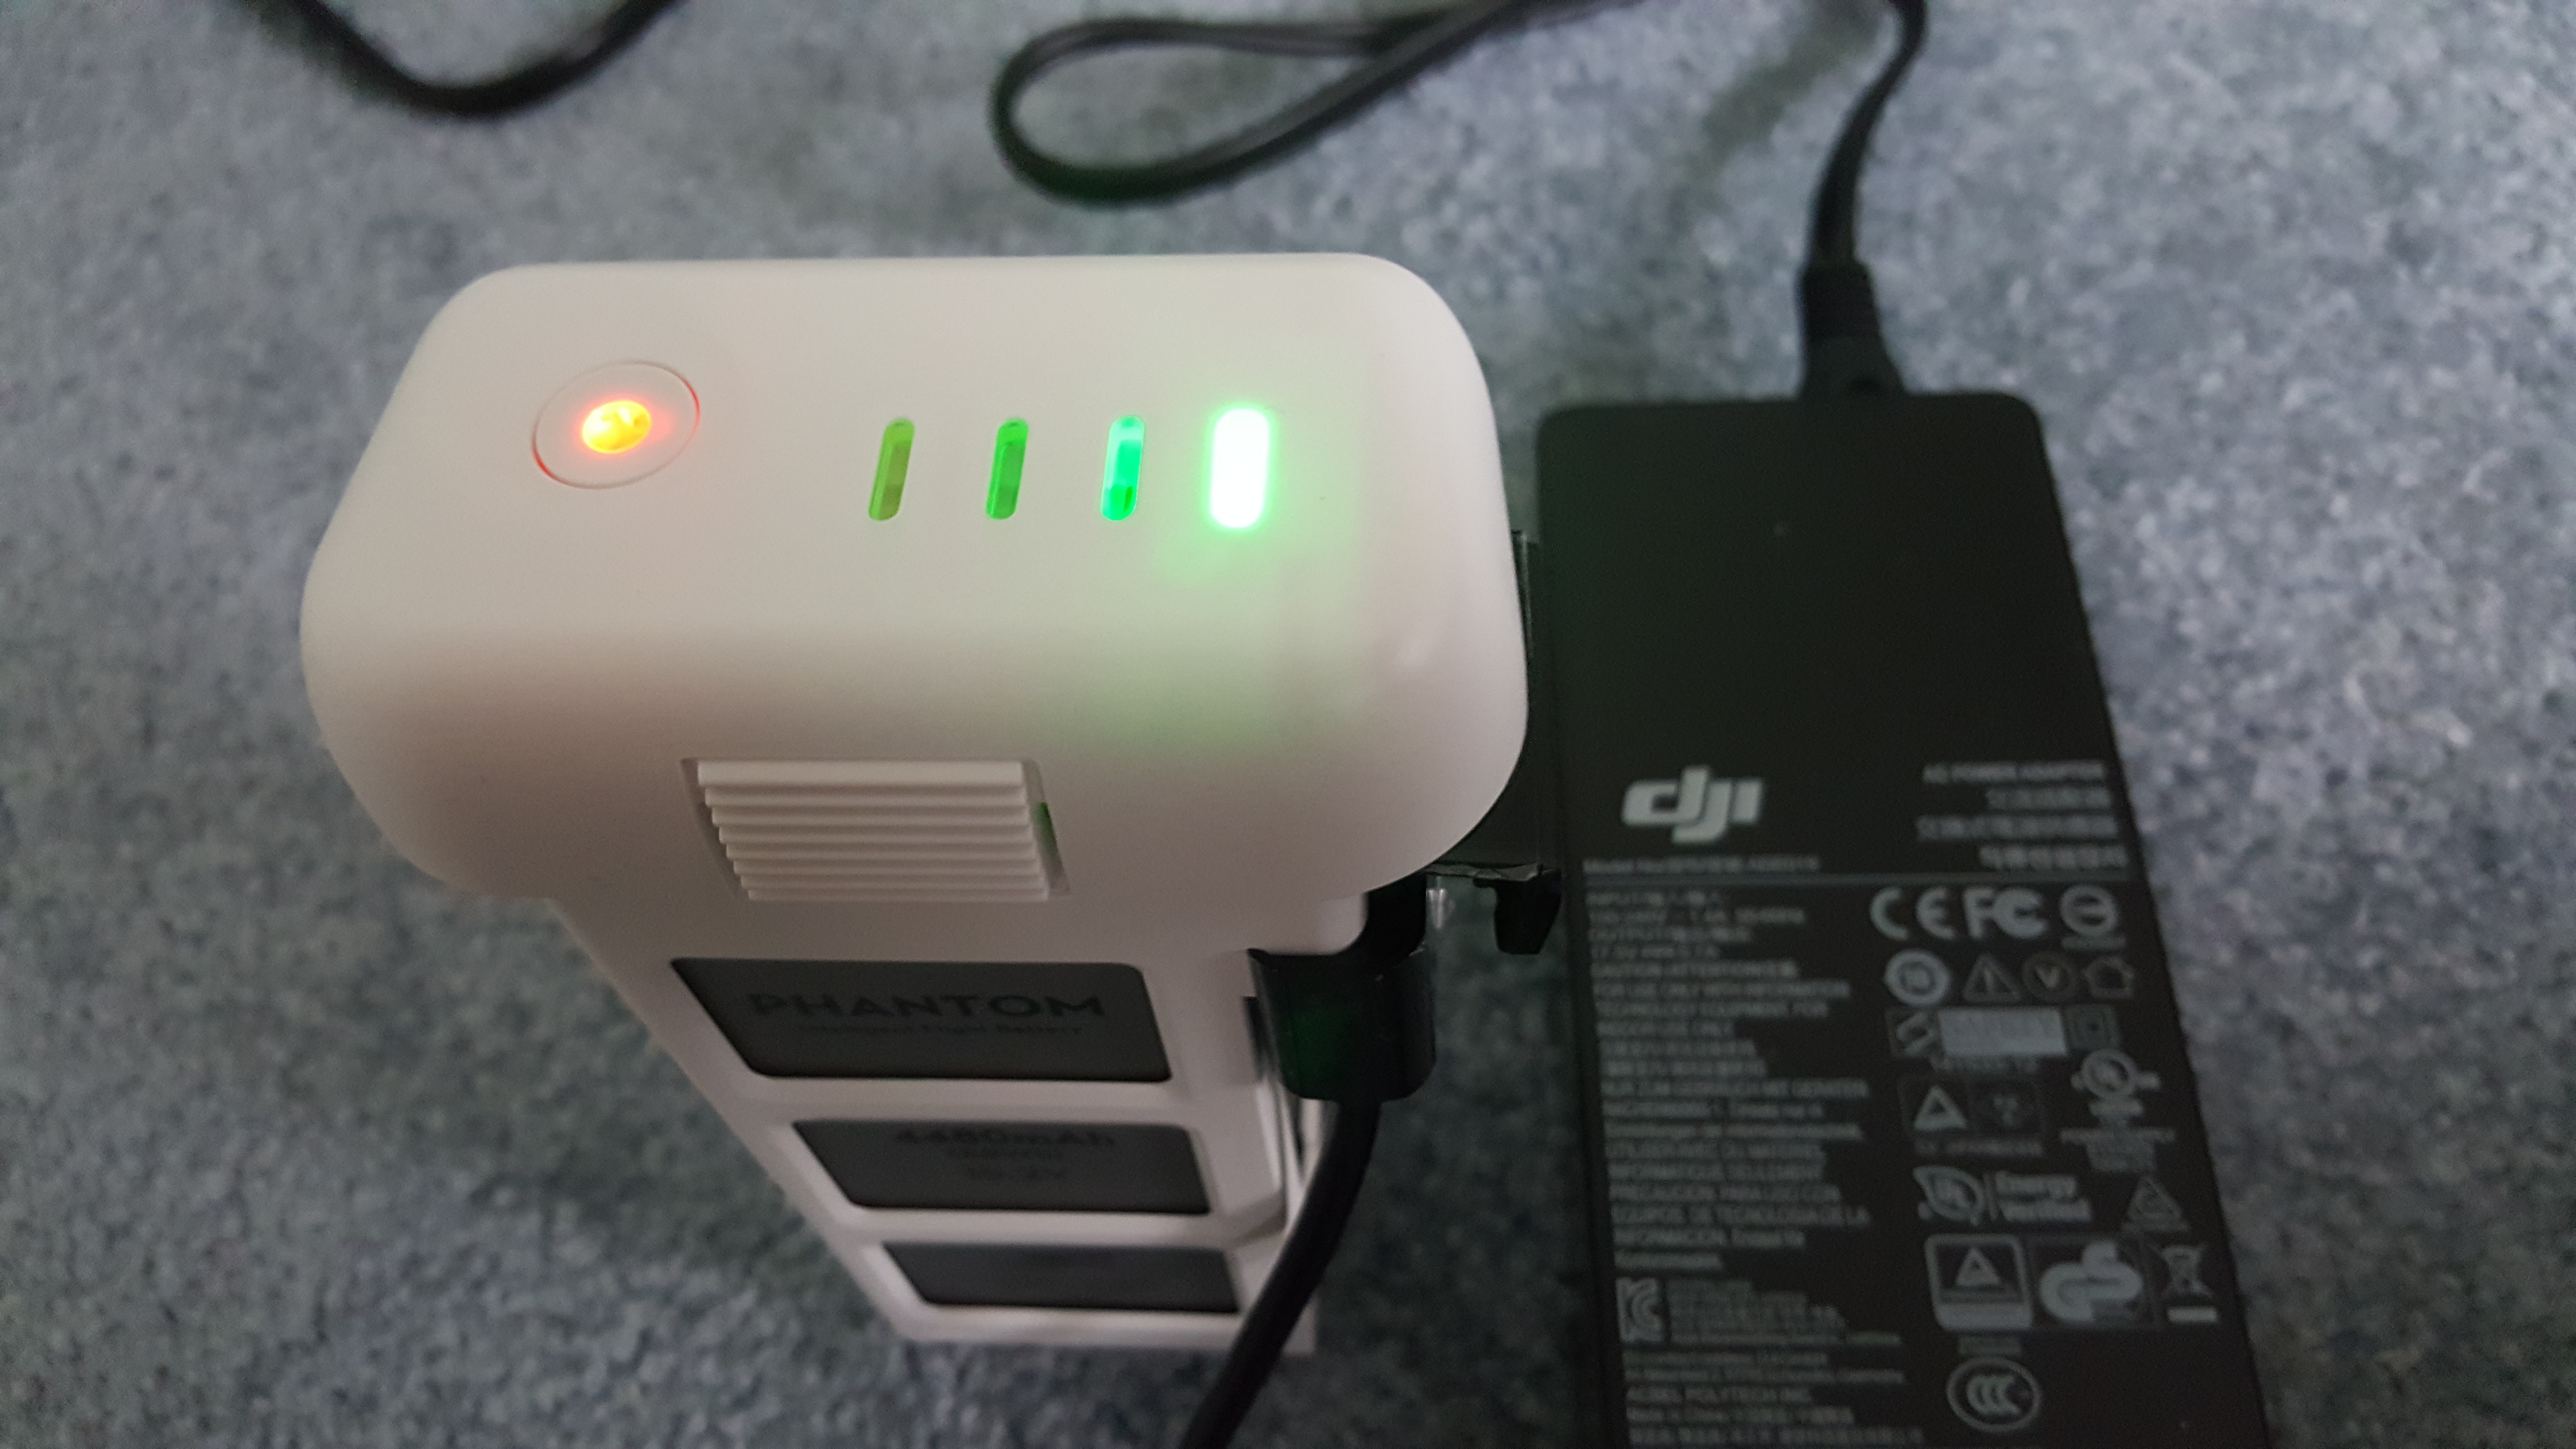 Phantom Won't Charge LED blinks 3 times | DJI Phantom Drone Forum